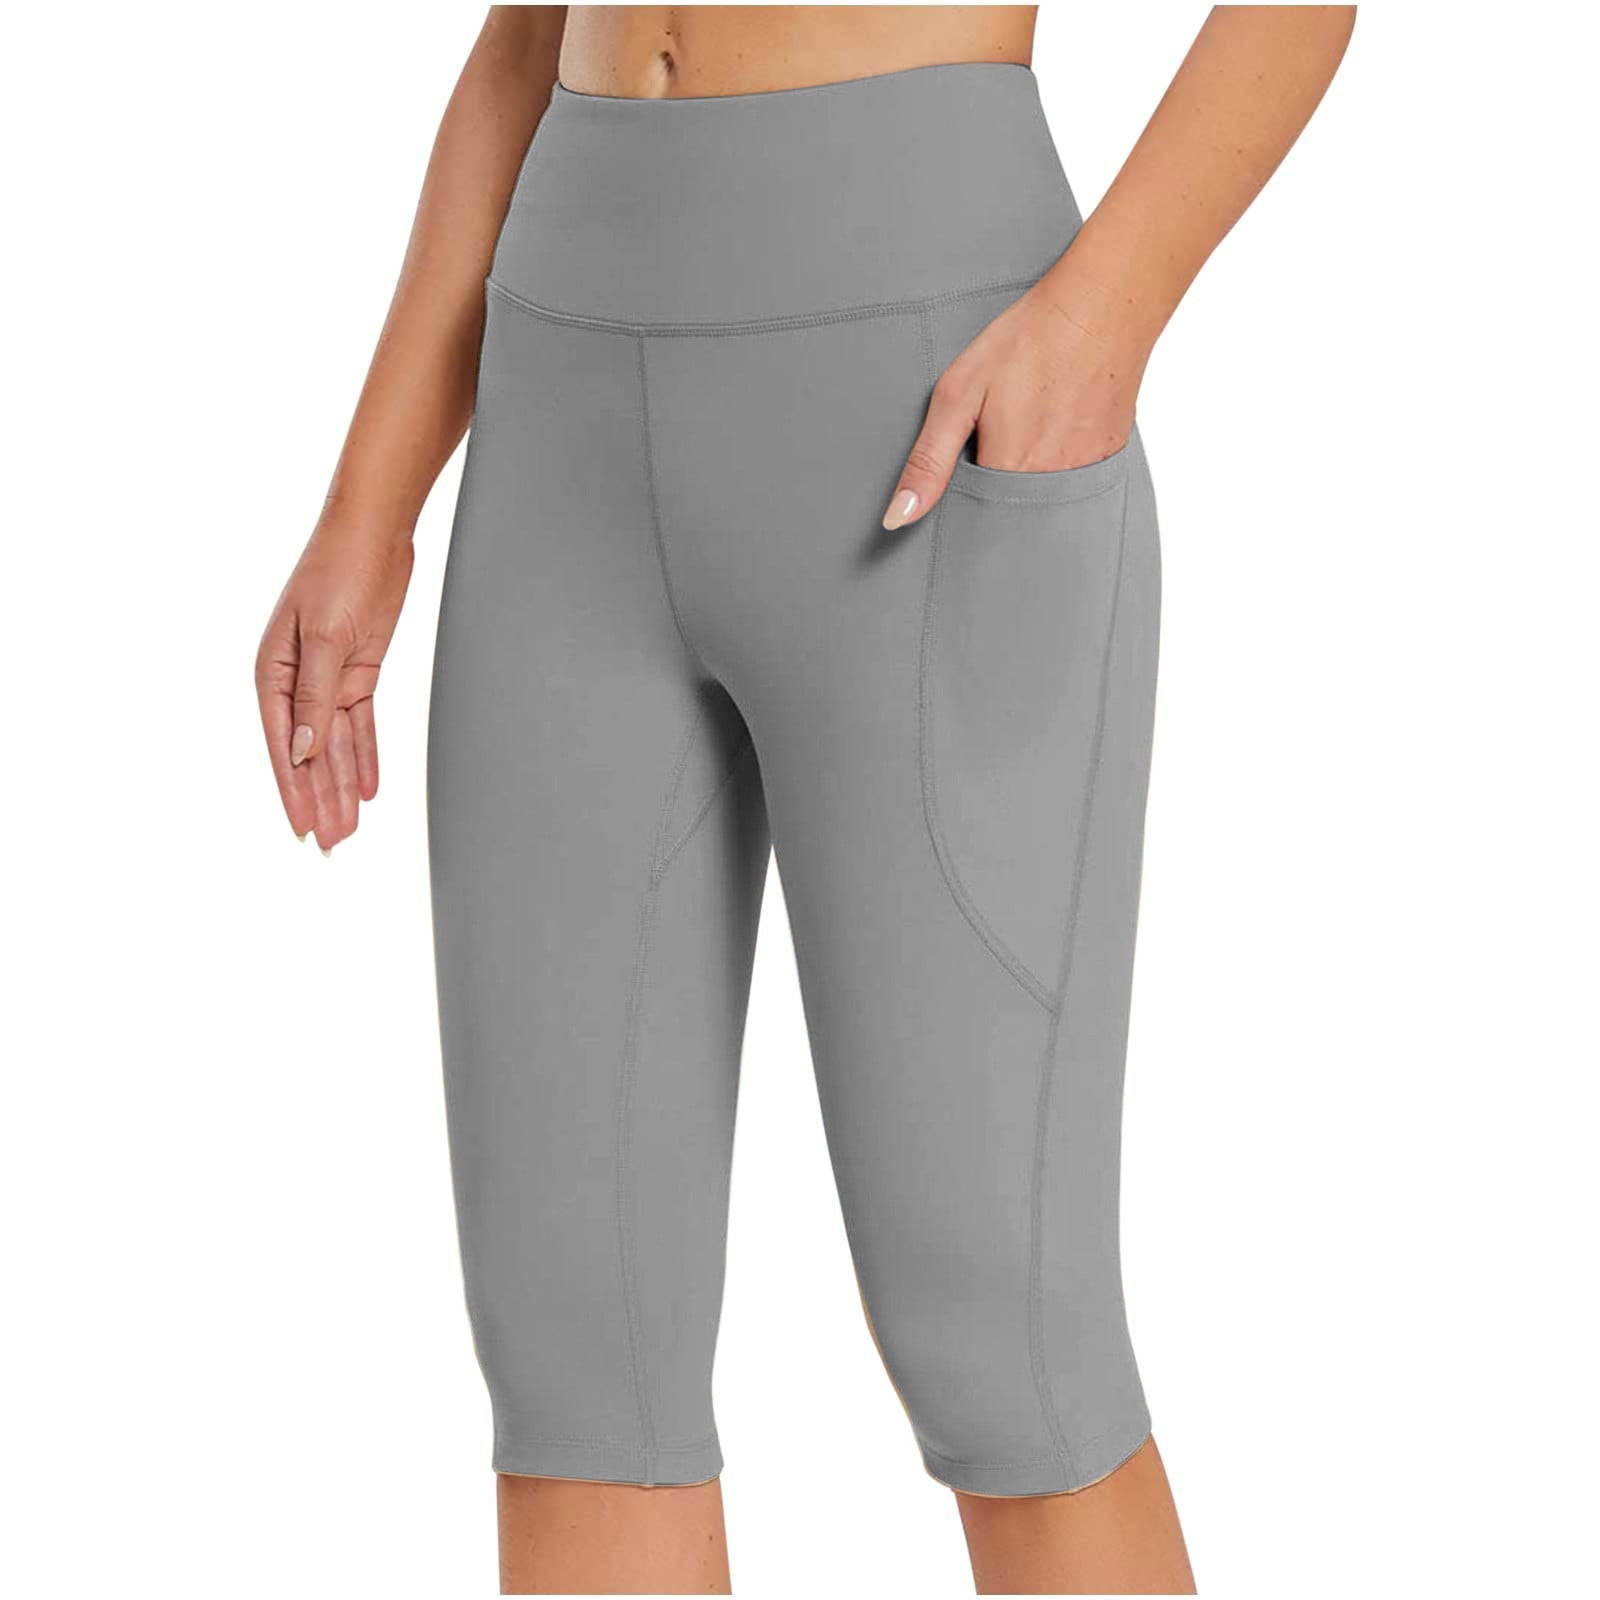 Efsteb High Waist Yoga Pants with Pockets Women Fitness Tummy